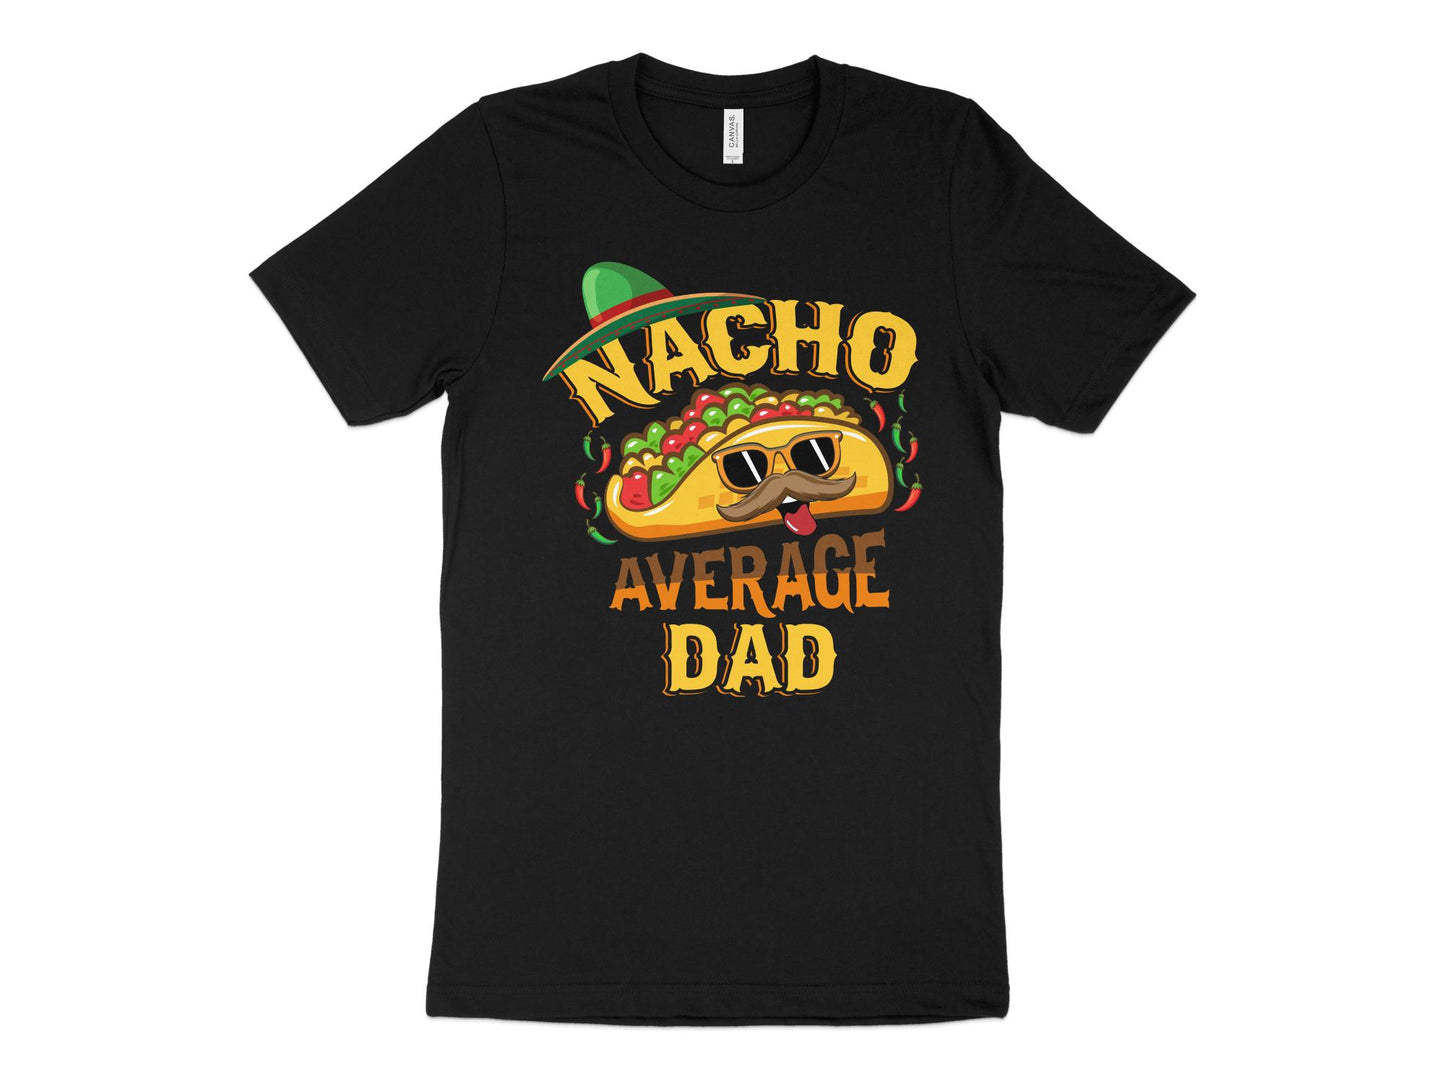 Nacho Average Dad Shirt, black